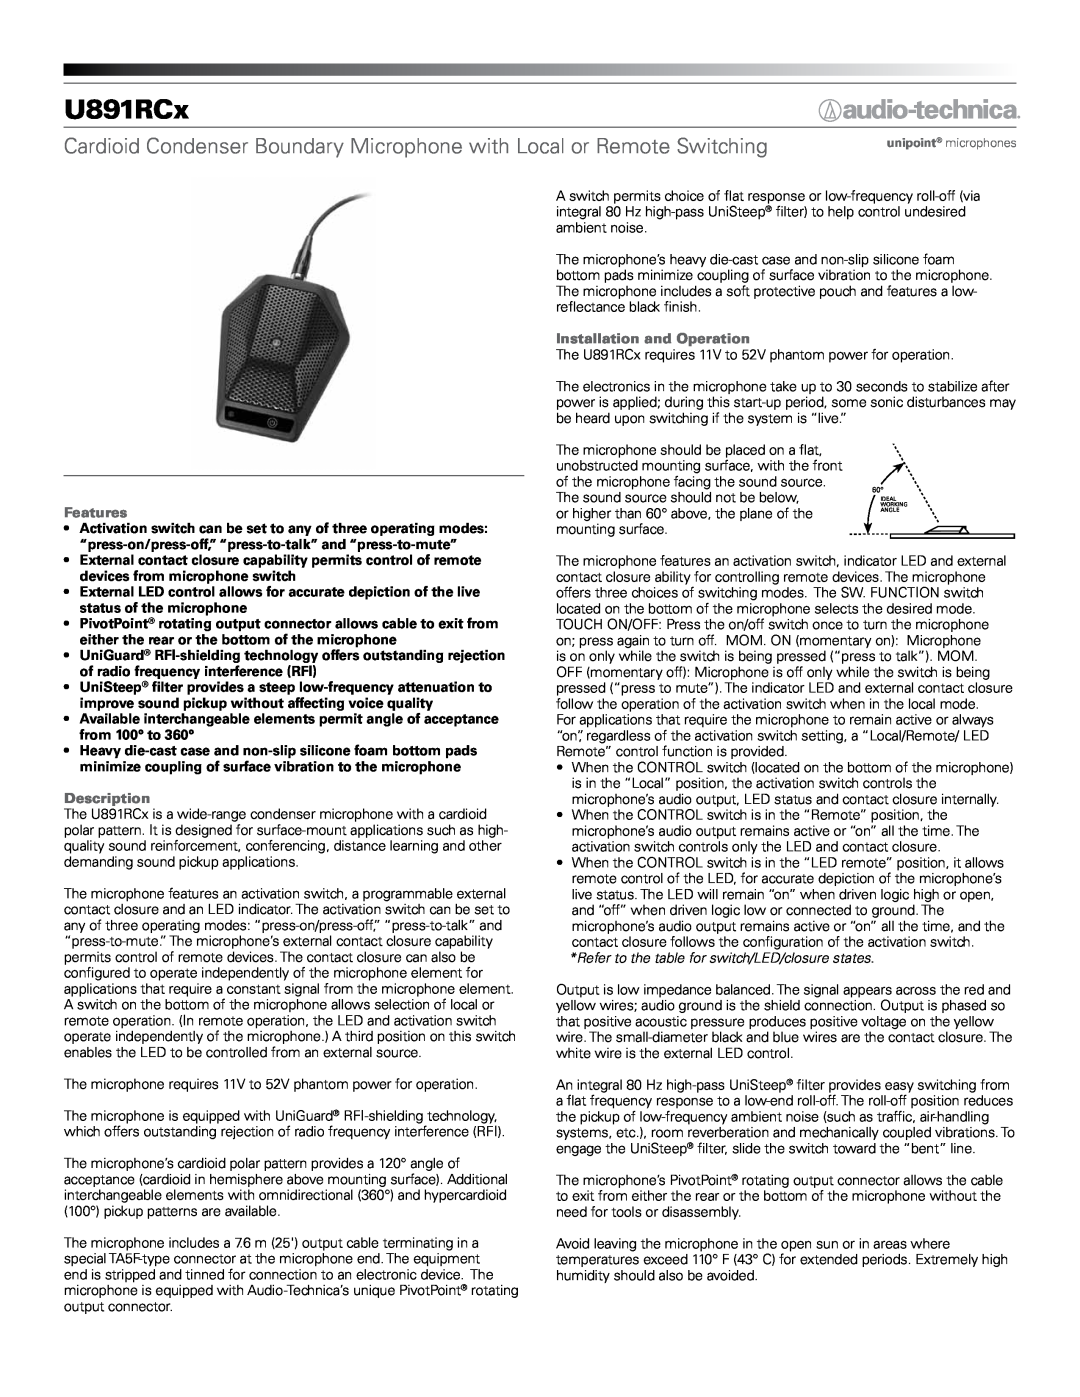 Audio-Technica U891RCX manual Features, Description, Installation and Operation, U891RCx 